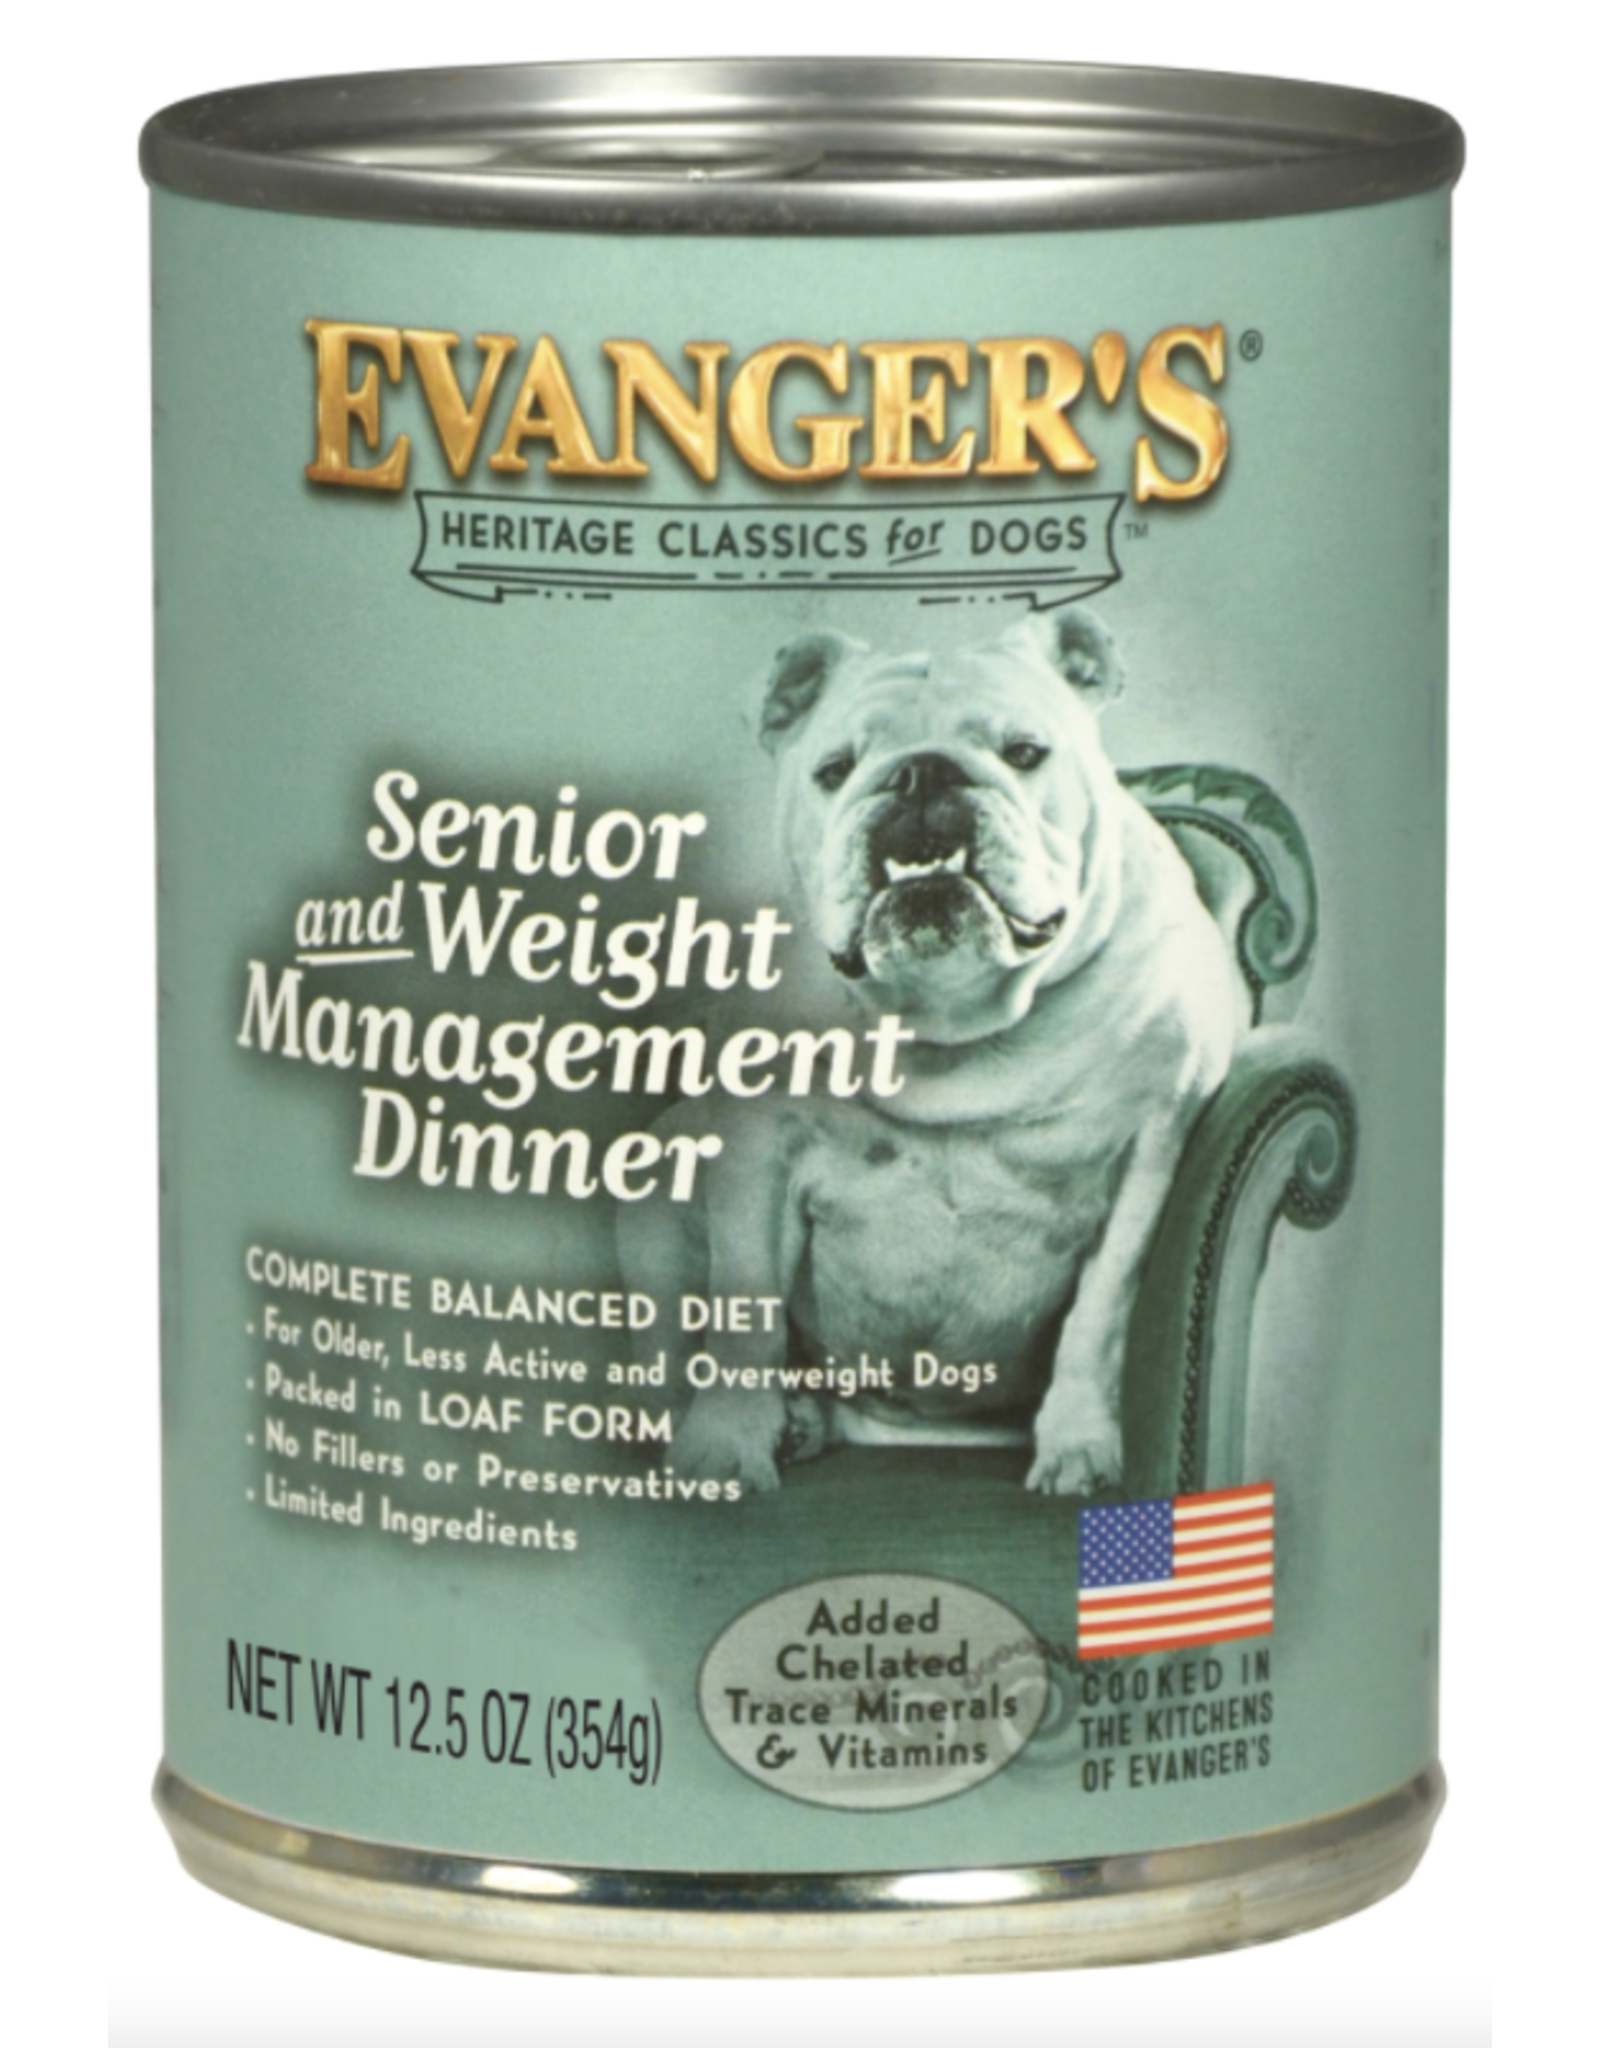 Evangers Evanger's Heritage Classic Senior & Weight Management Dinner Dog Food 12.5oz